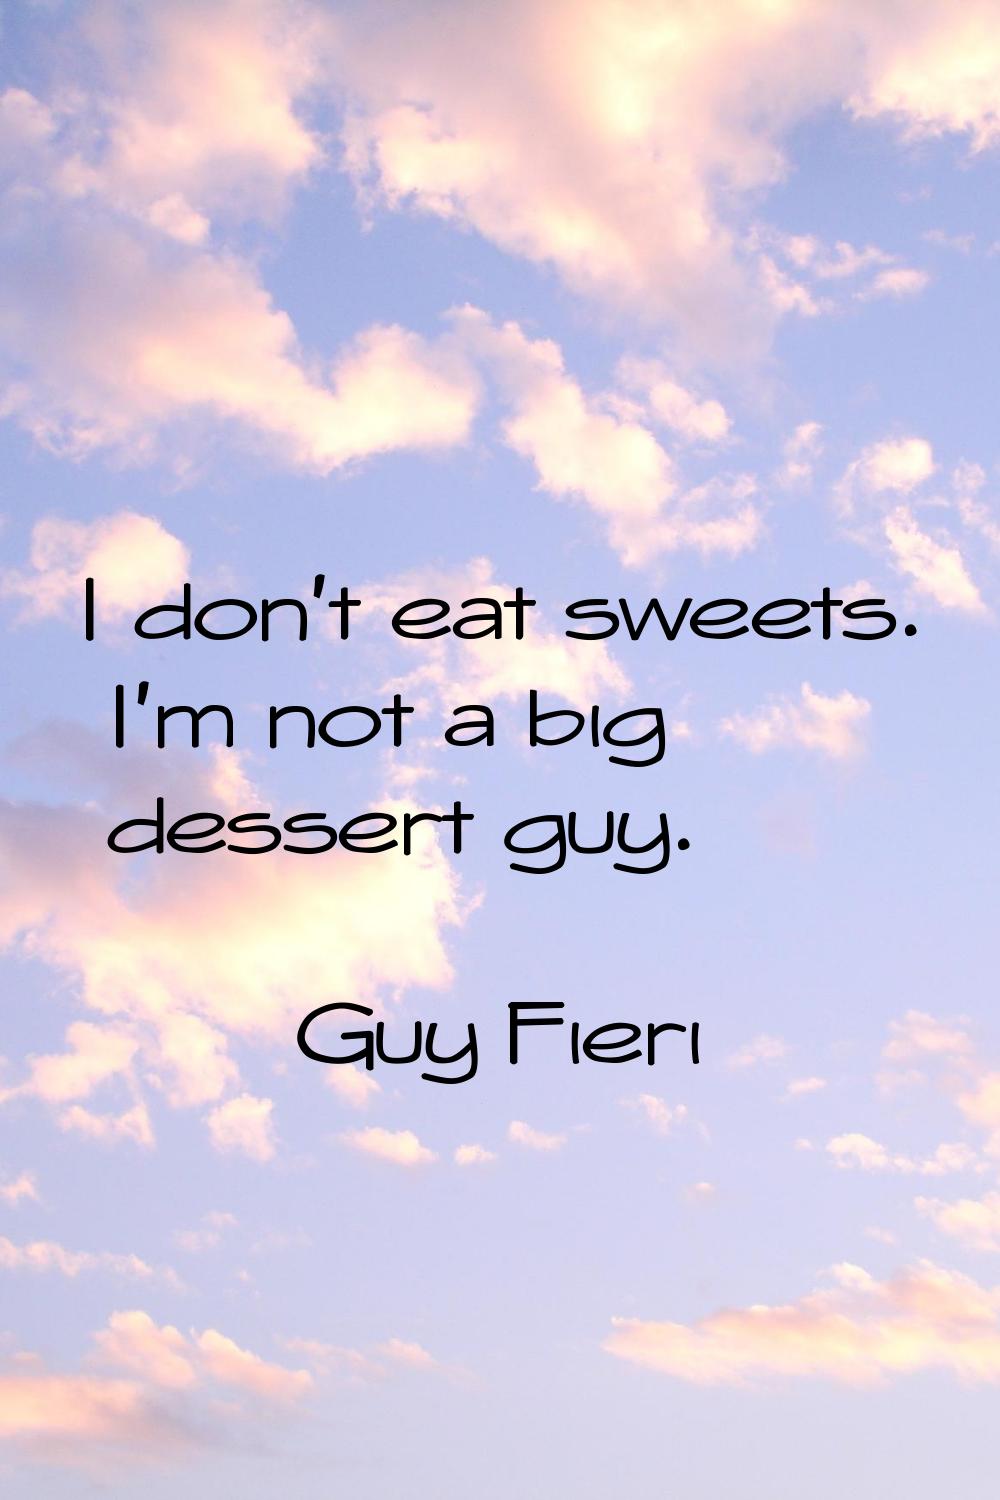 I don't eat sweets. I'm not a big dessert guy.